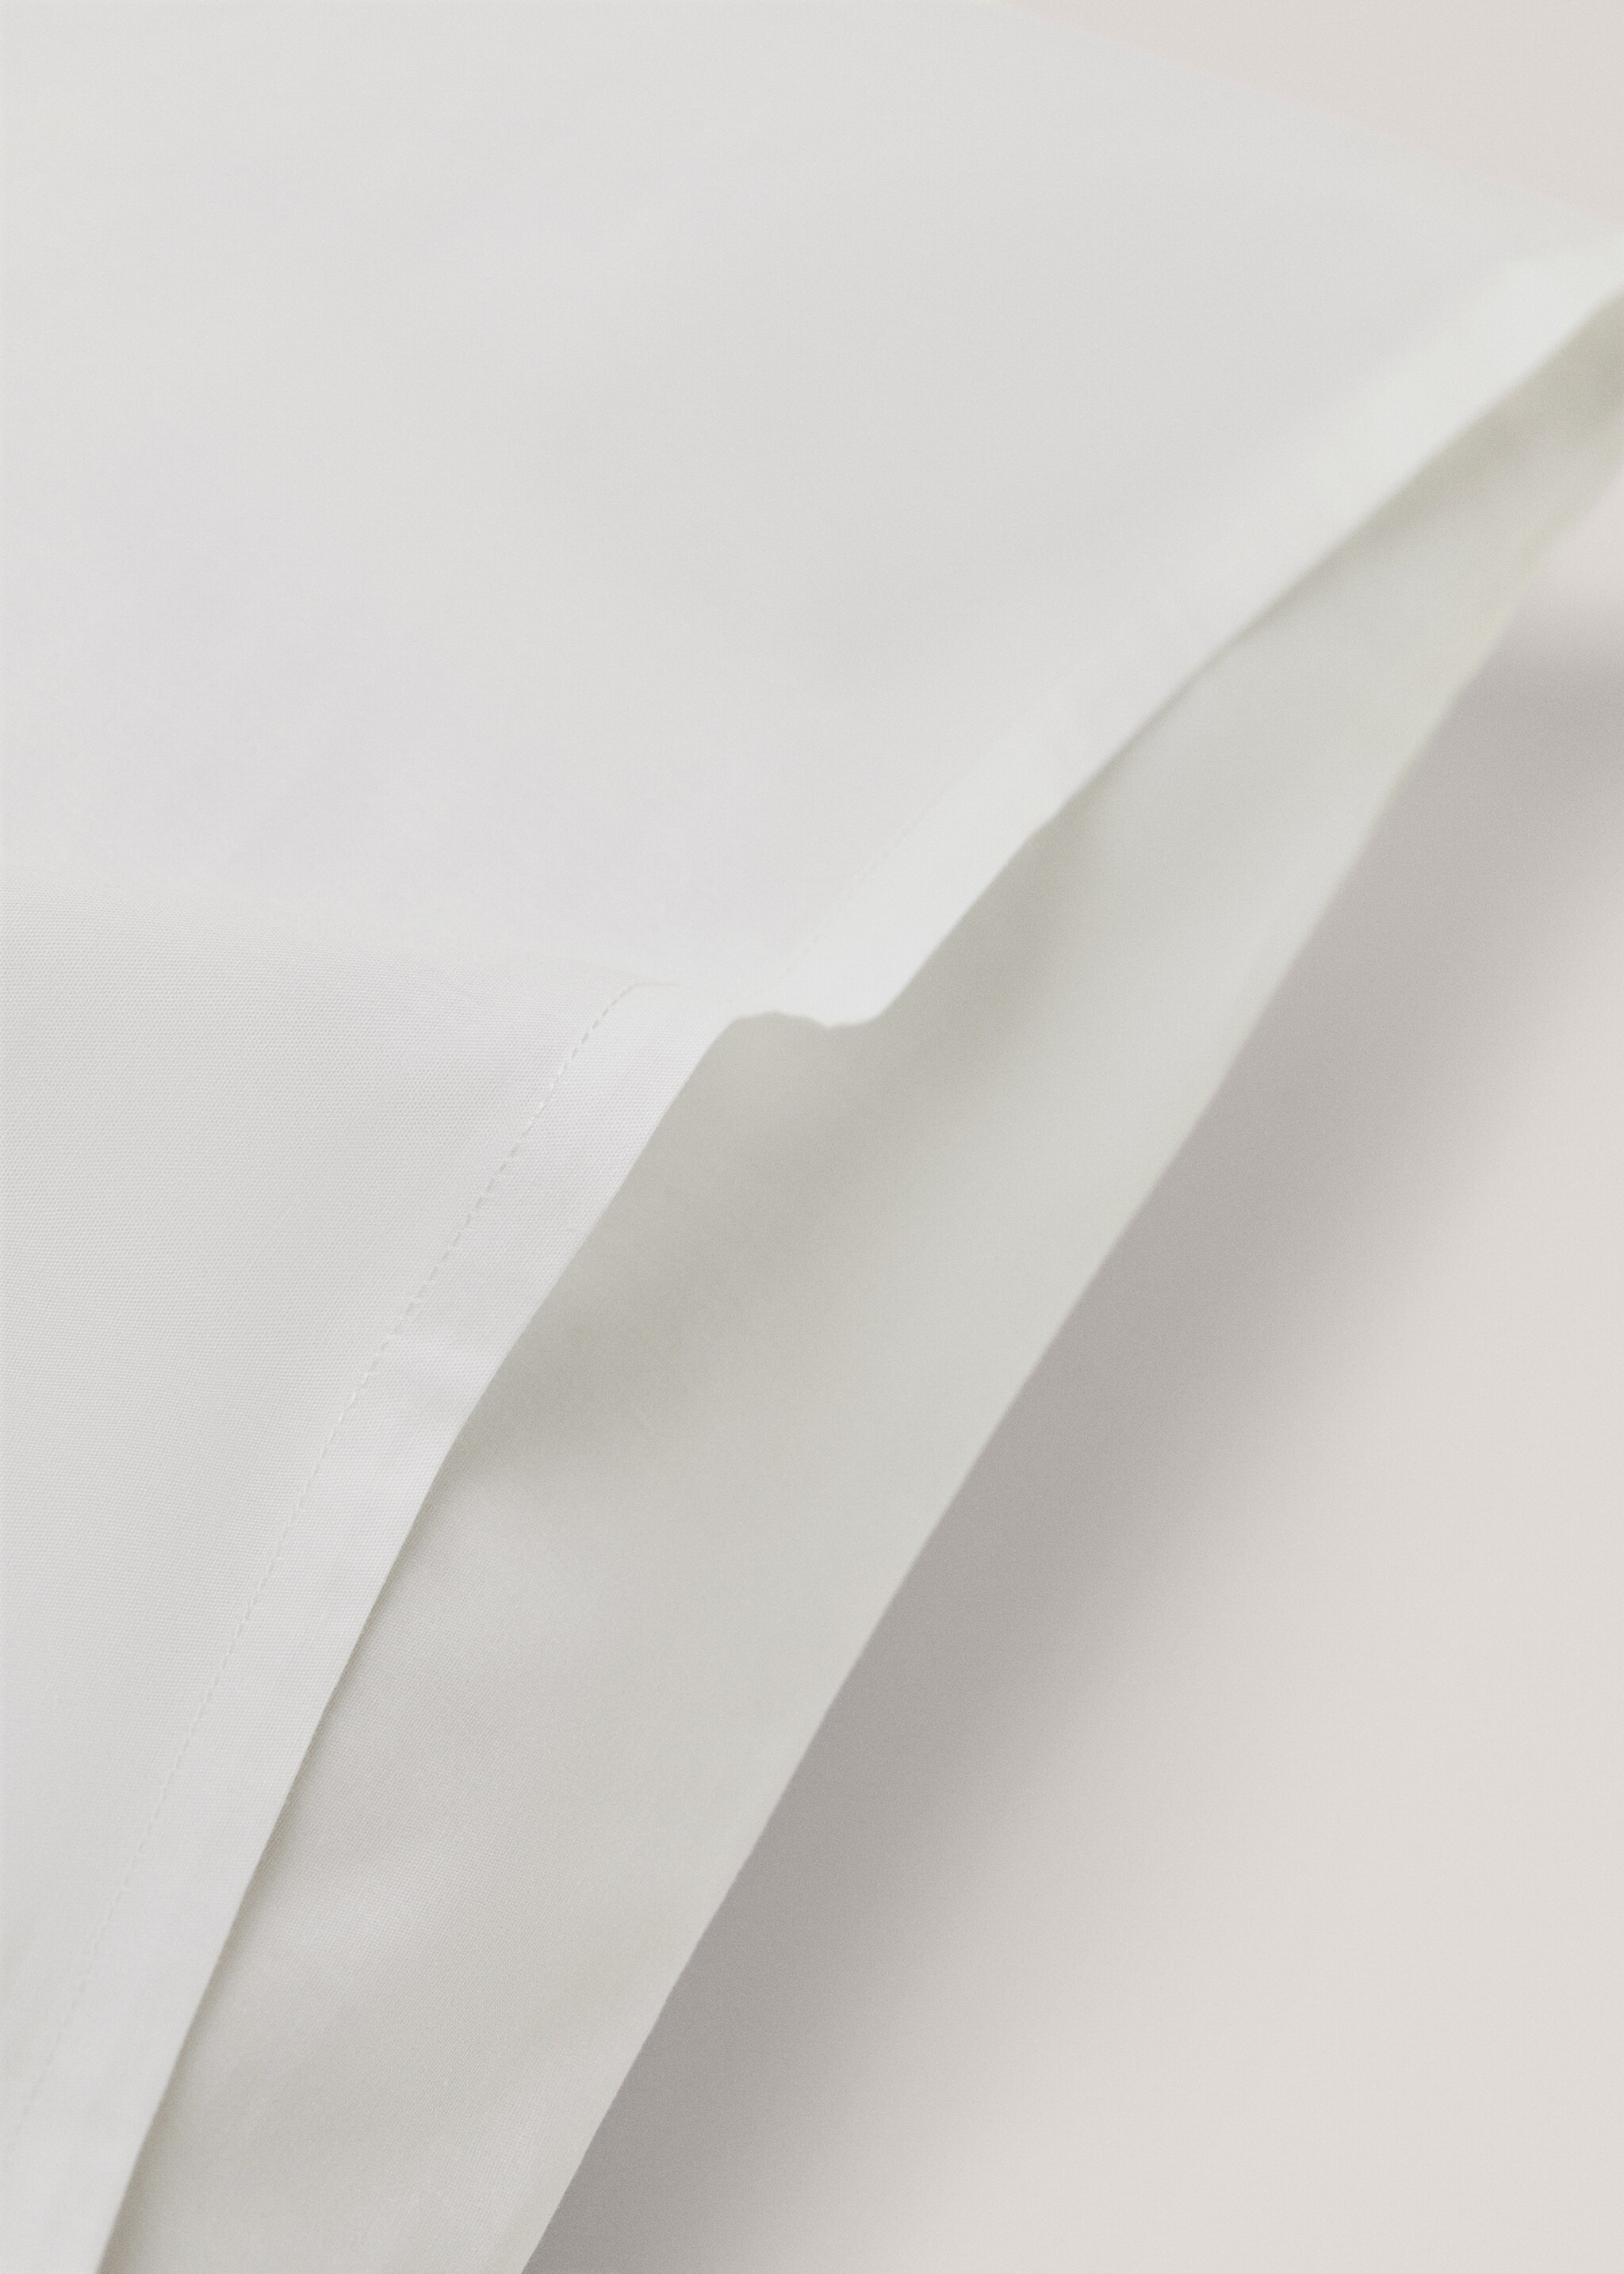 Percale cotton pillowcase 50x75cm - Details of the article 2